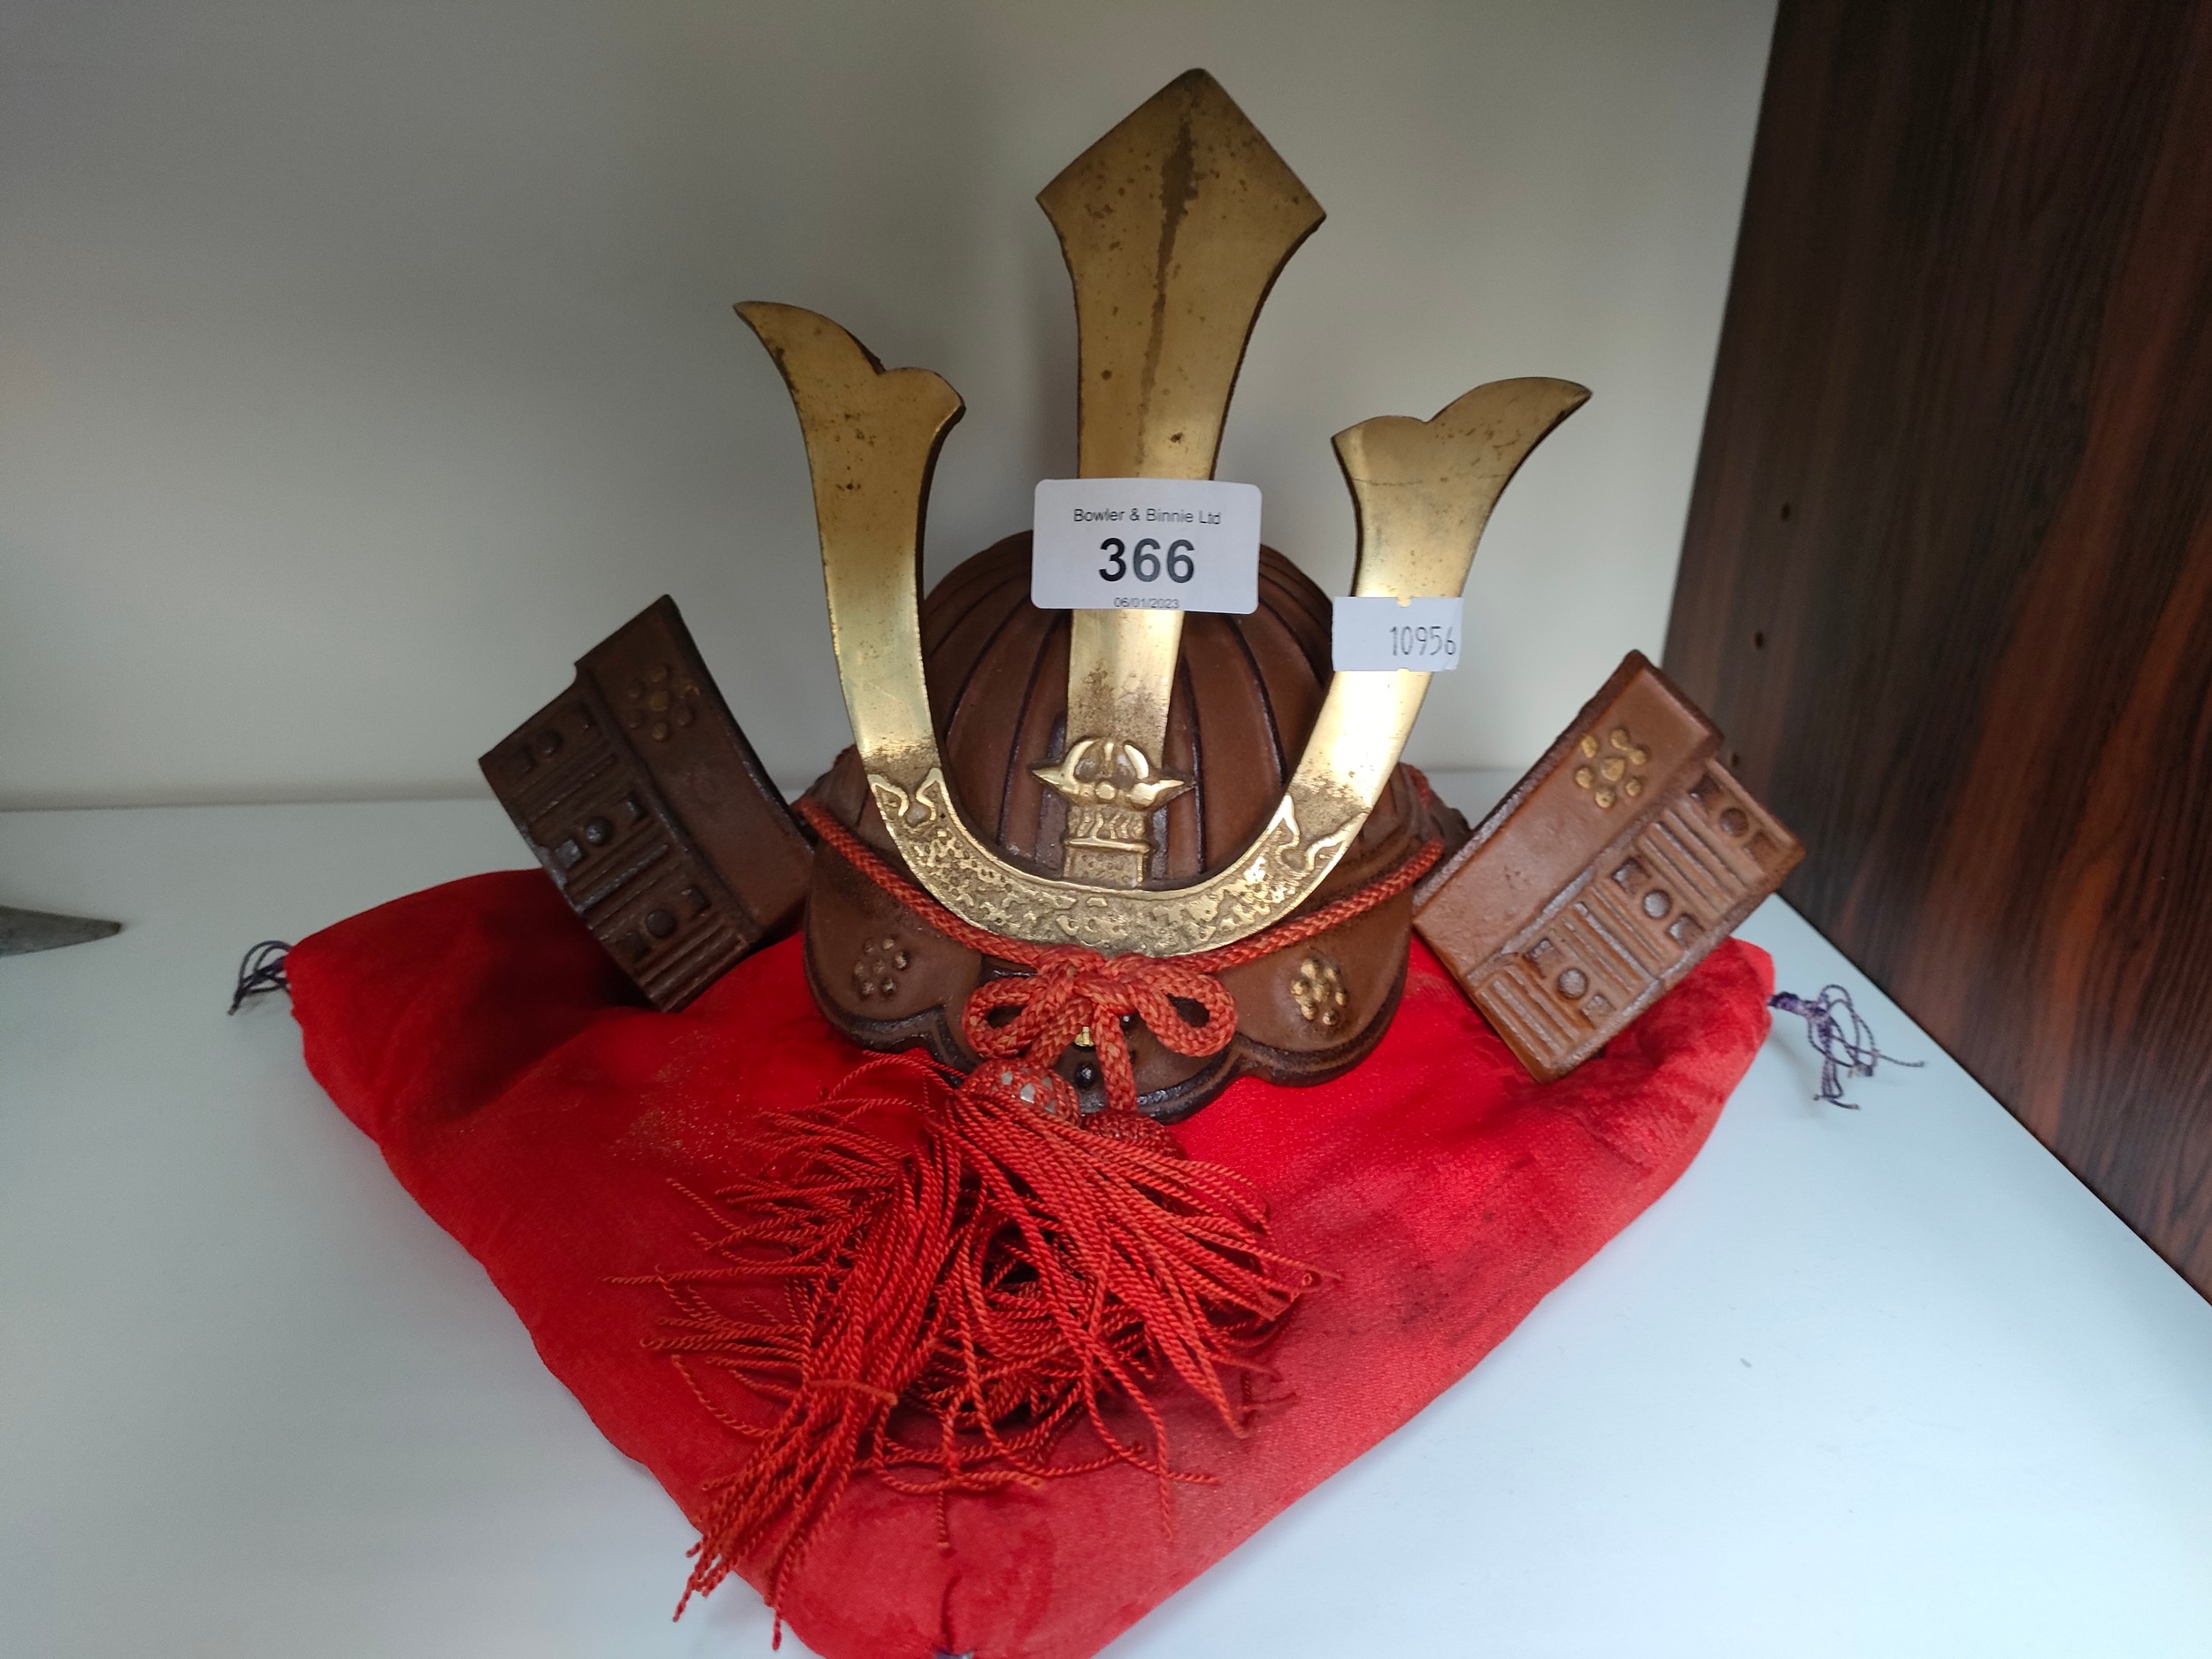 Oriental samurai warrior ornamental small display helmet and cushion.